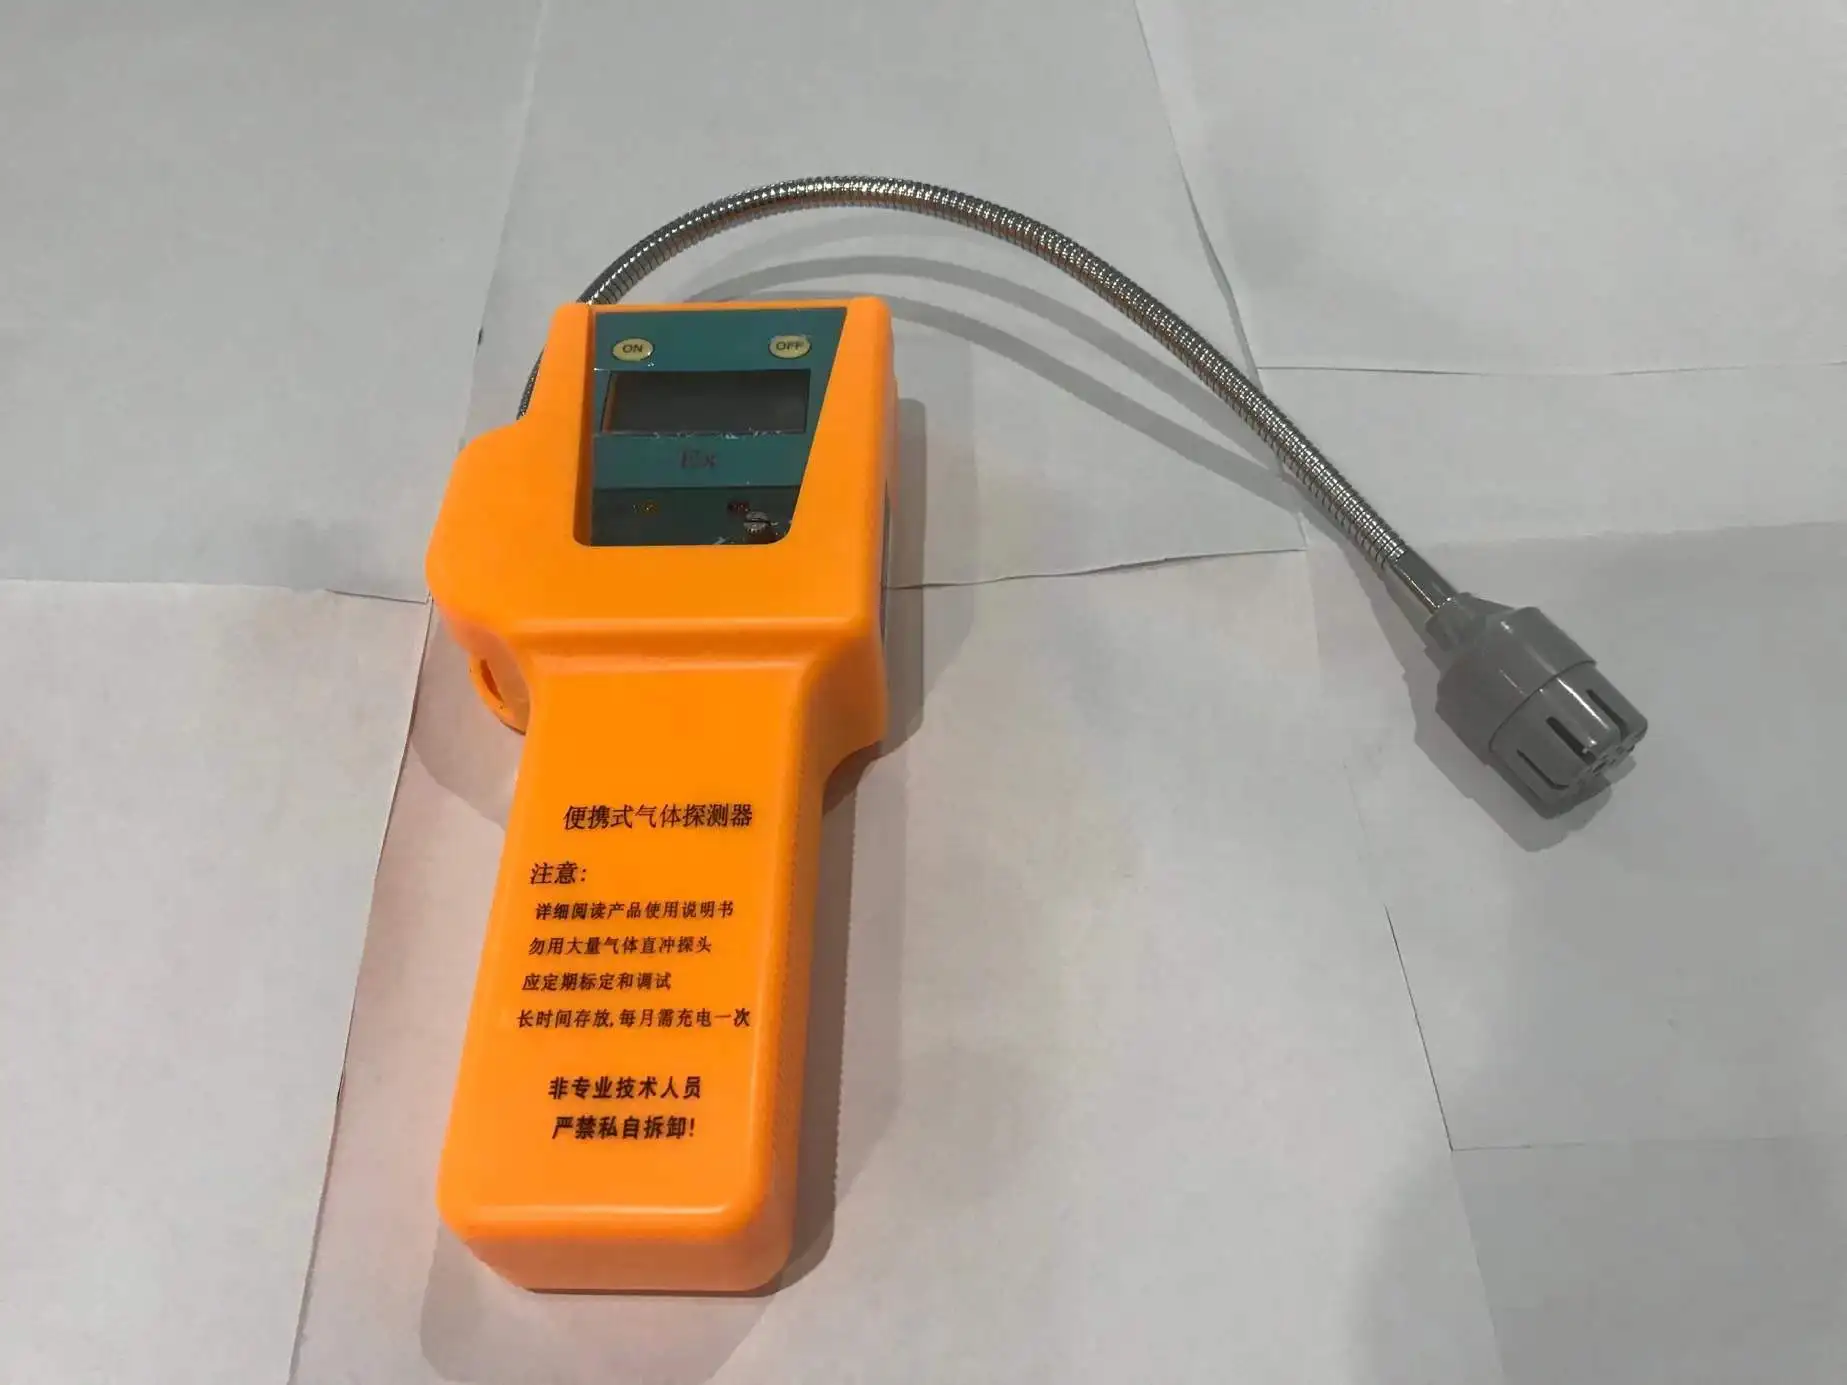 0-100%LEL sound and light portable handheld natural gas leak detector with external pump enlarge